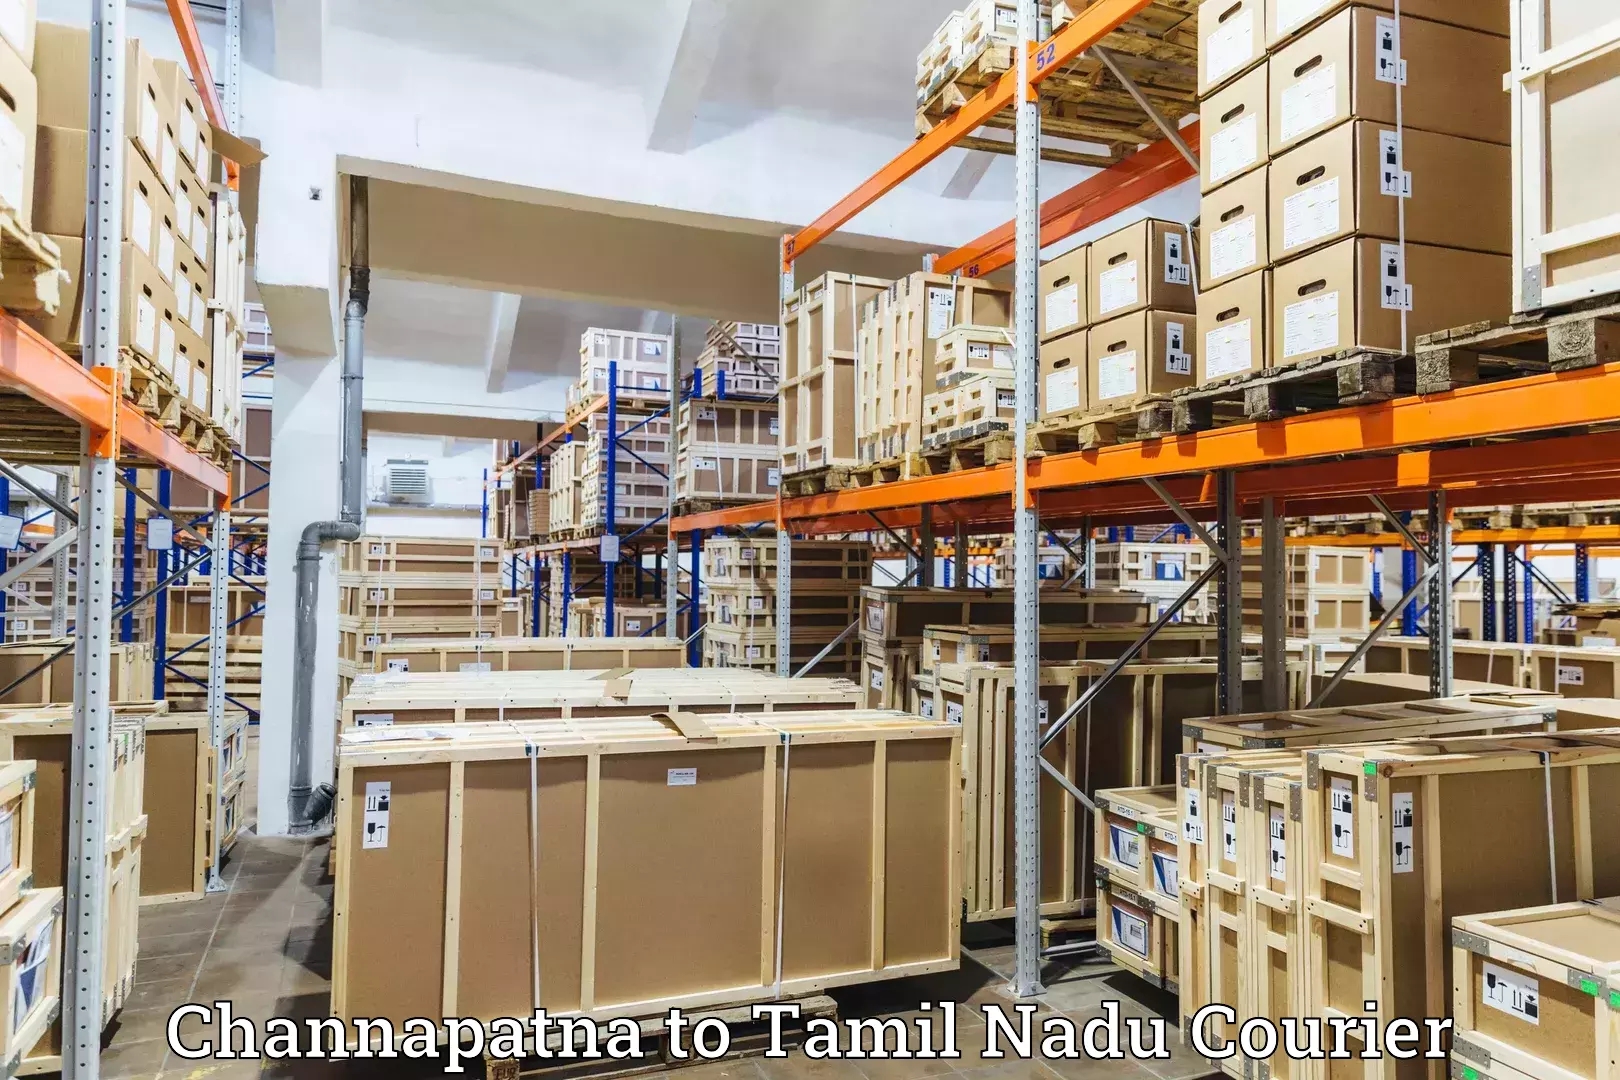 International parcel service Channapatna to Chennai